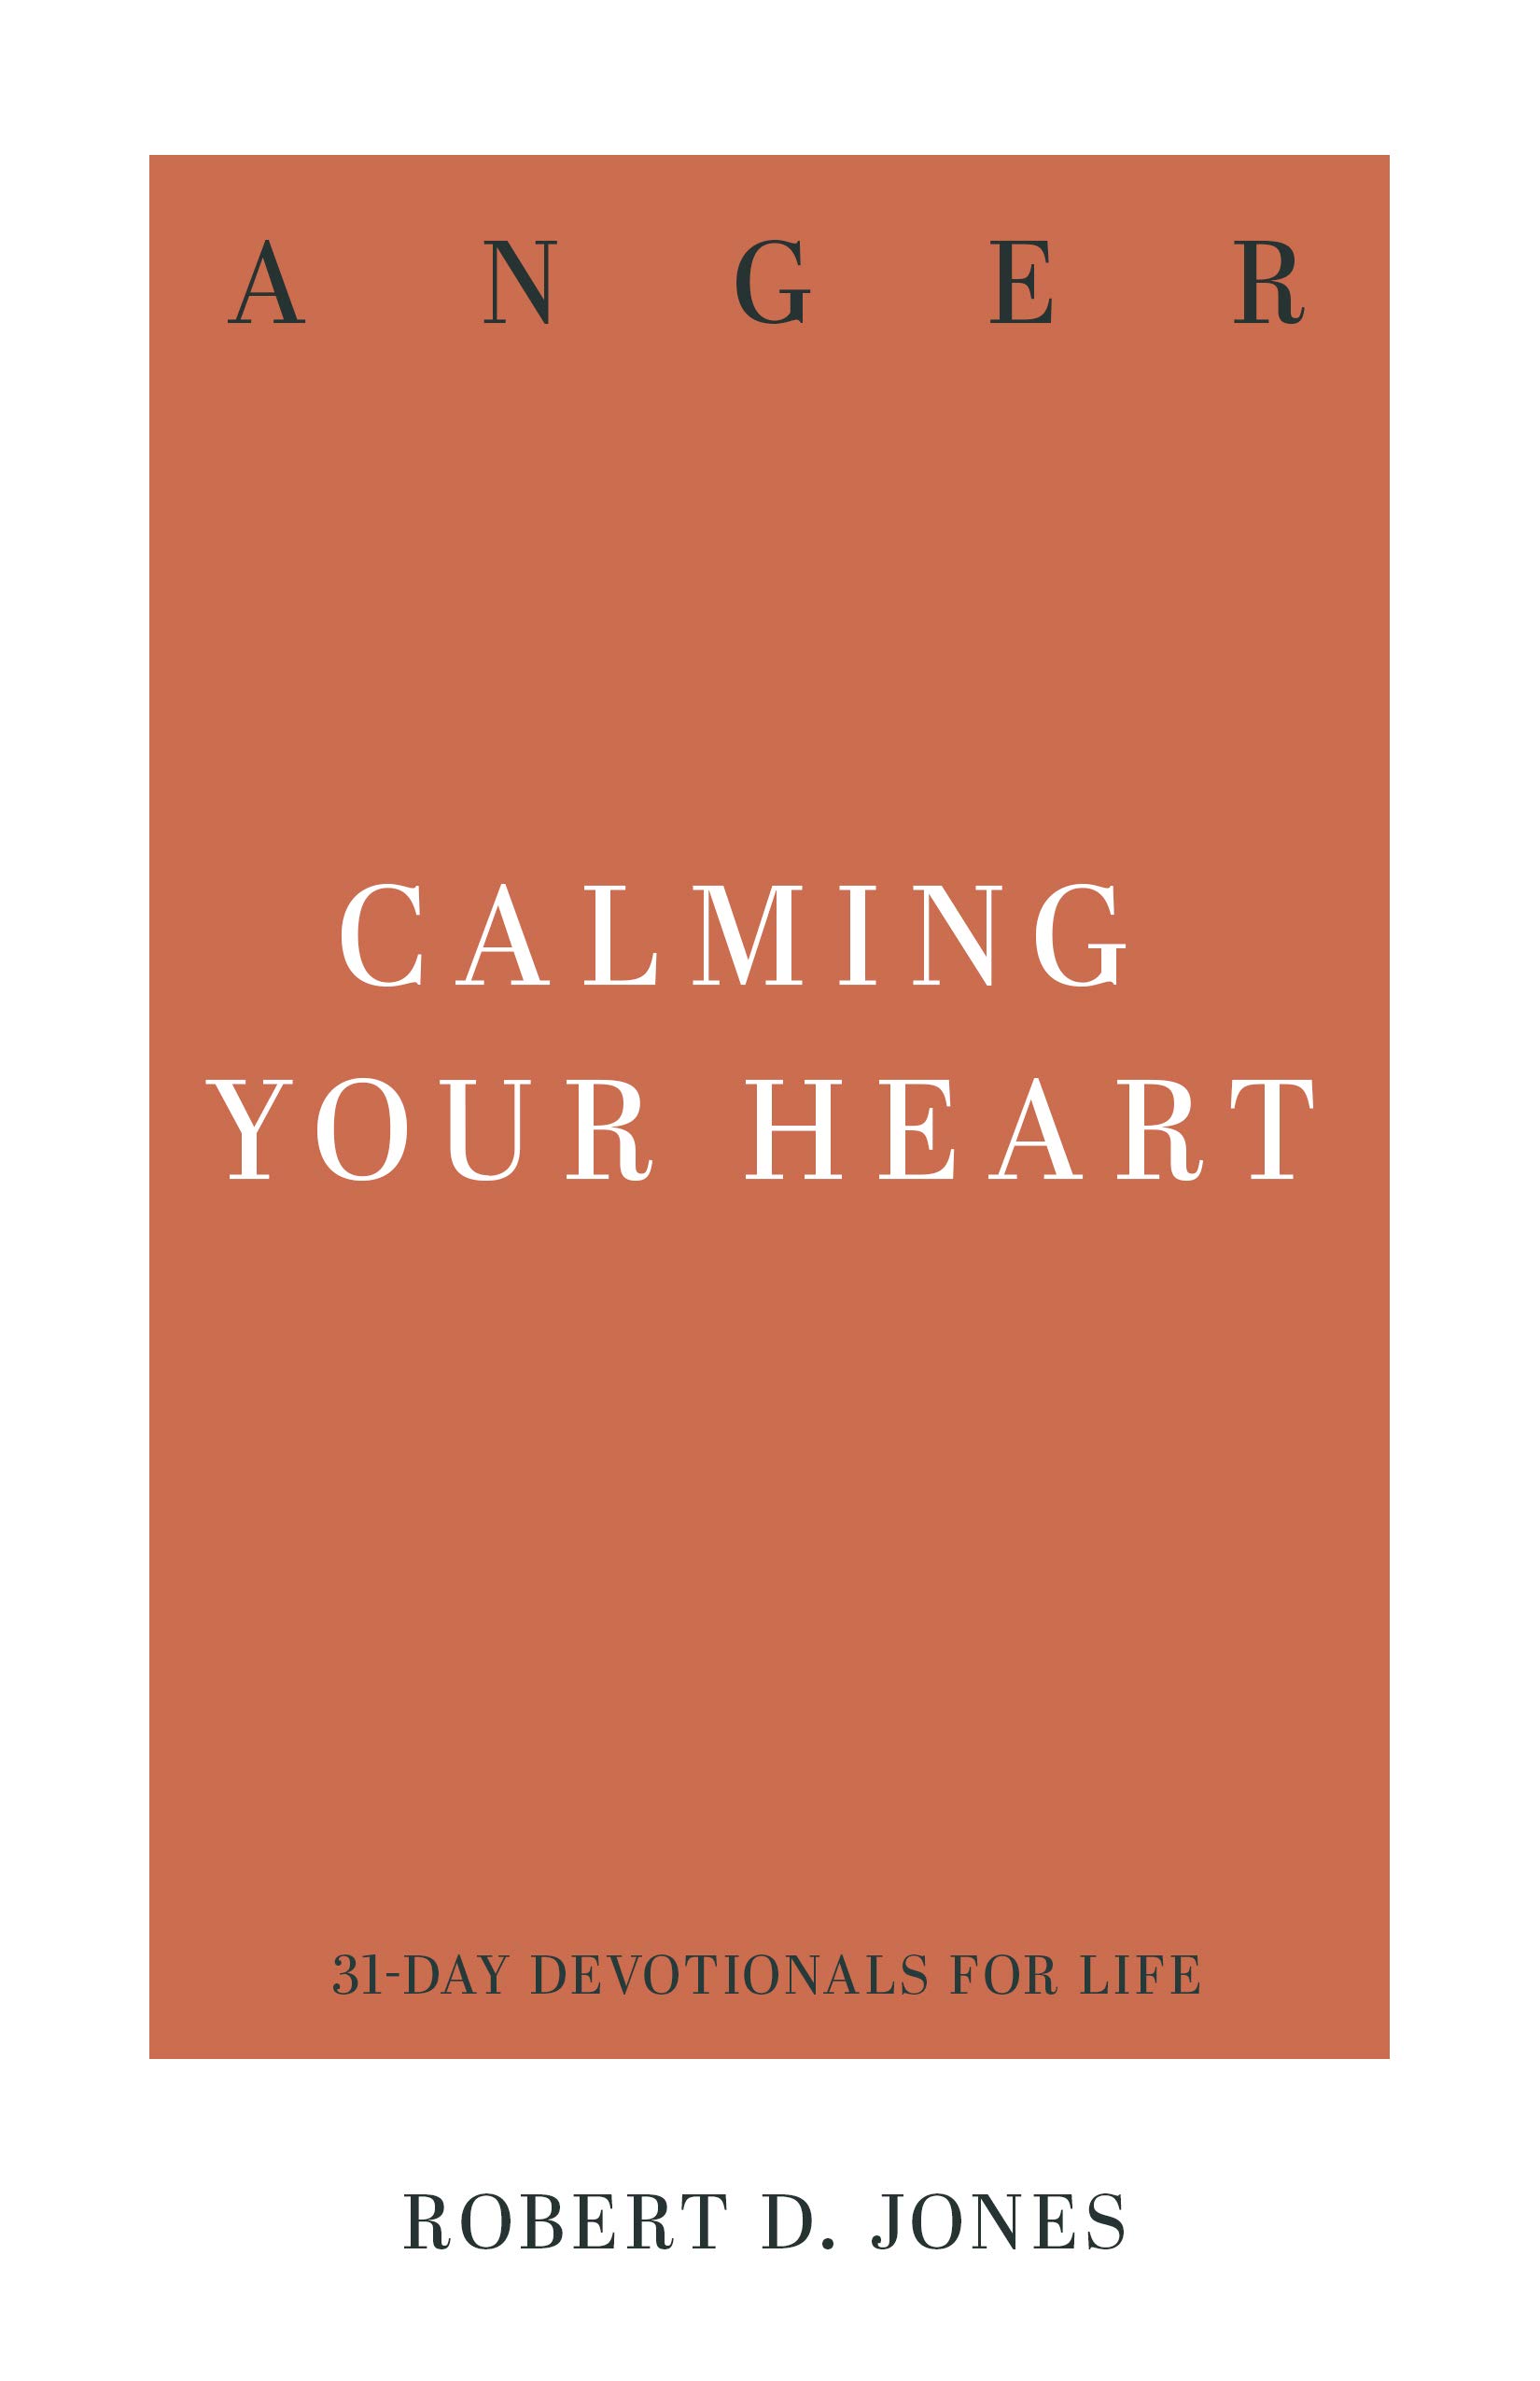 Book Notice: ANGER: CALMING YOUR HEART (31-DAY DEVOTIONALS FOR LIFE), by Robert D. Jones